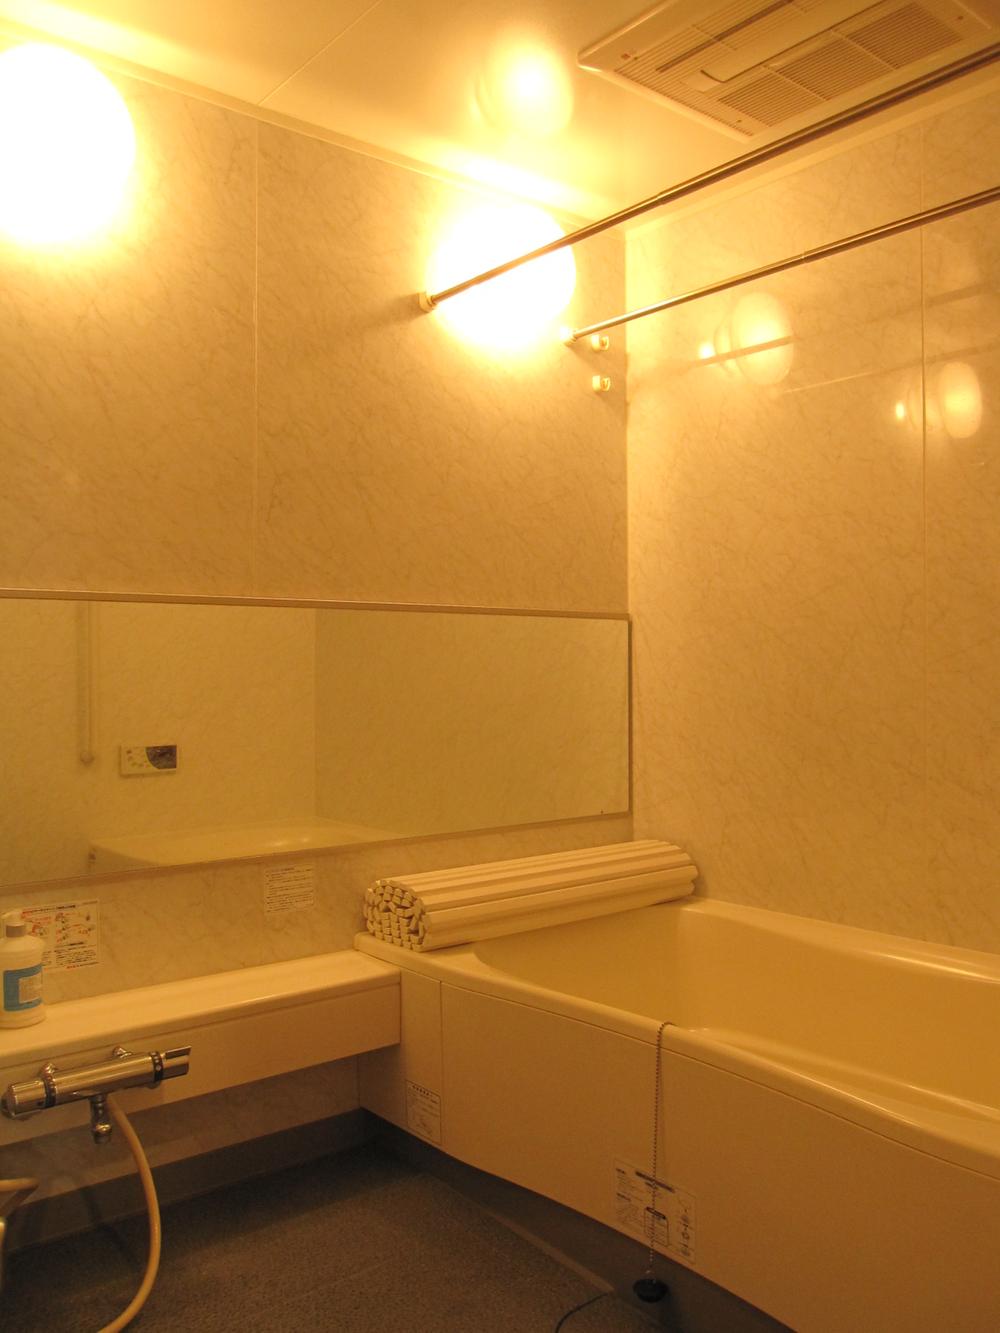 Bathroom. 1620 large bathroom size. With bathroom ventilation dryer.